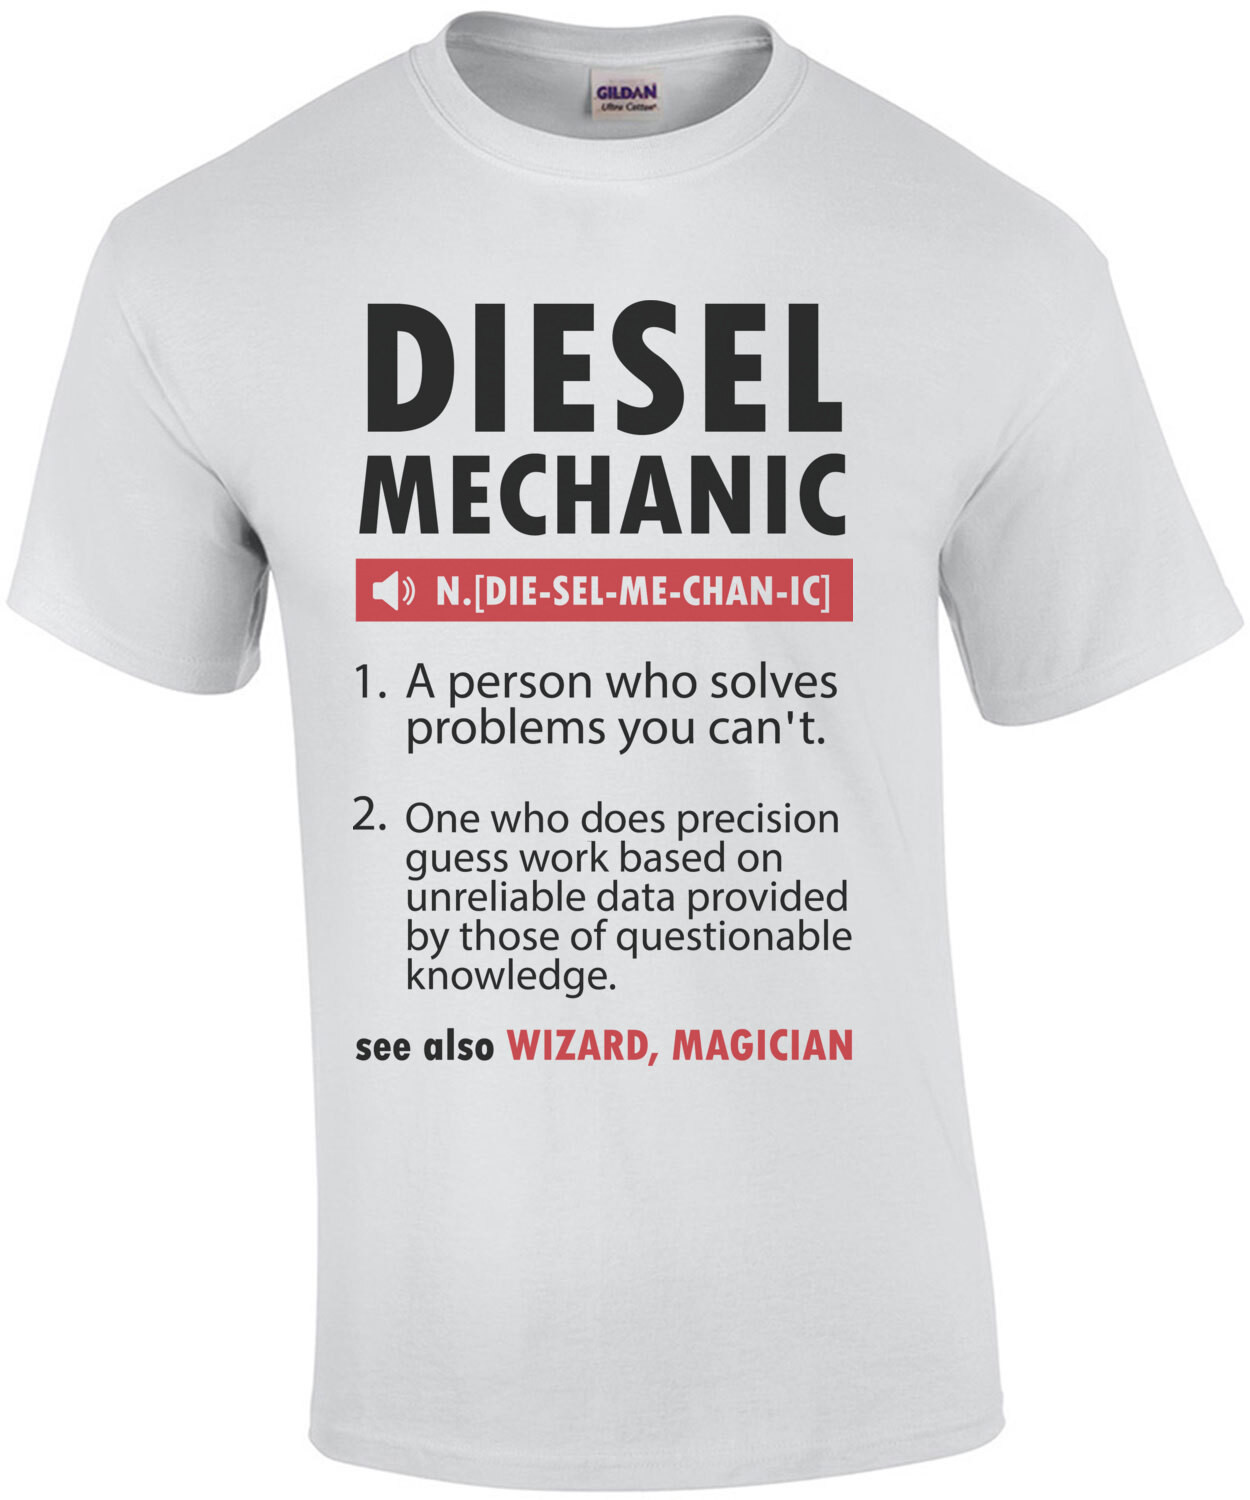 Diesel Mechanic T-Shirt